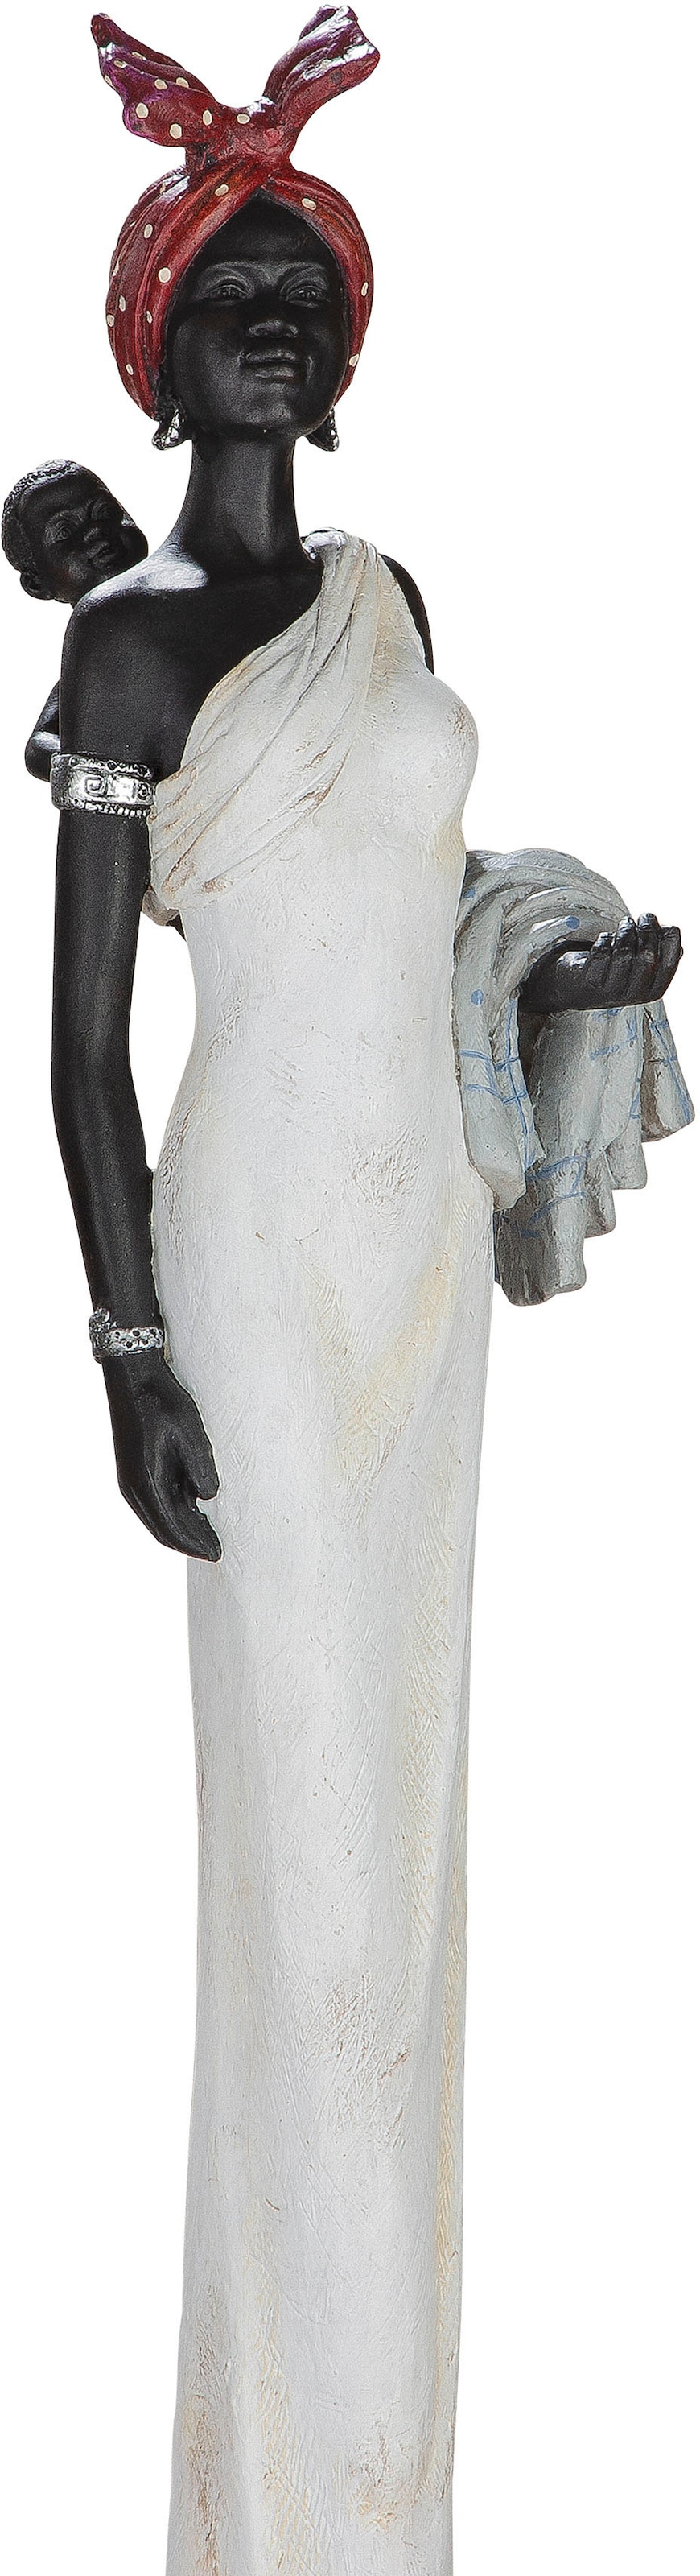 GILDE Afrikafigur »Afrikanerin Tortuga«, Höhe 104 cm, Wohnzimmer